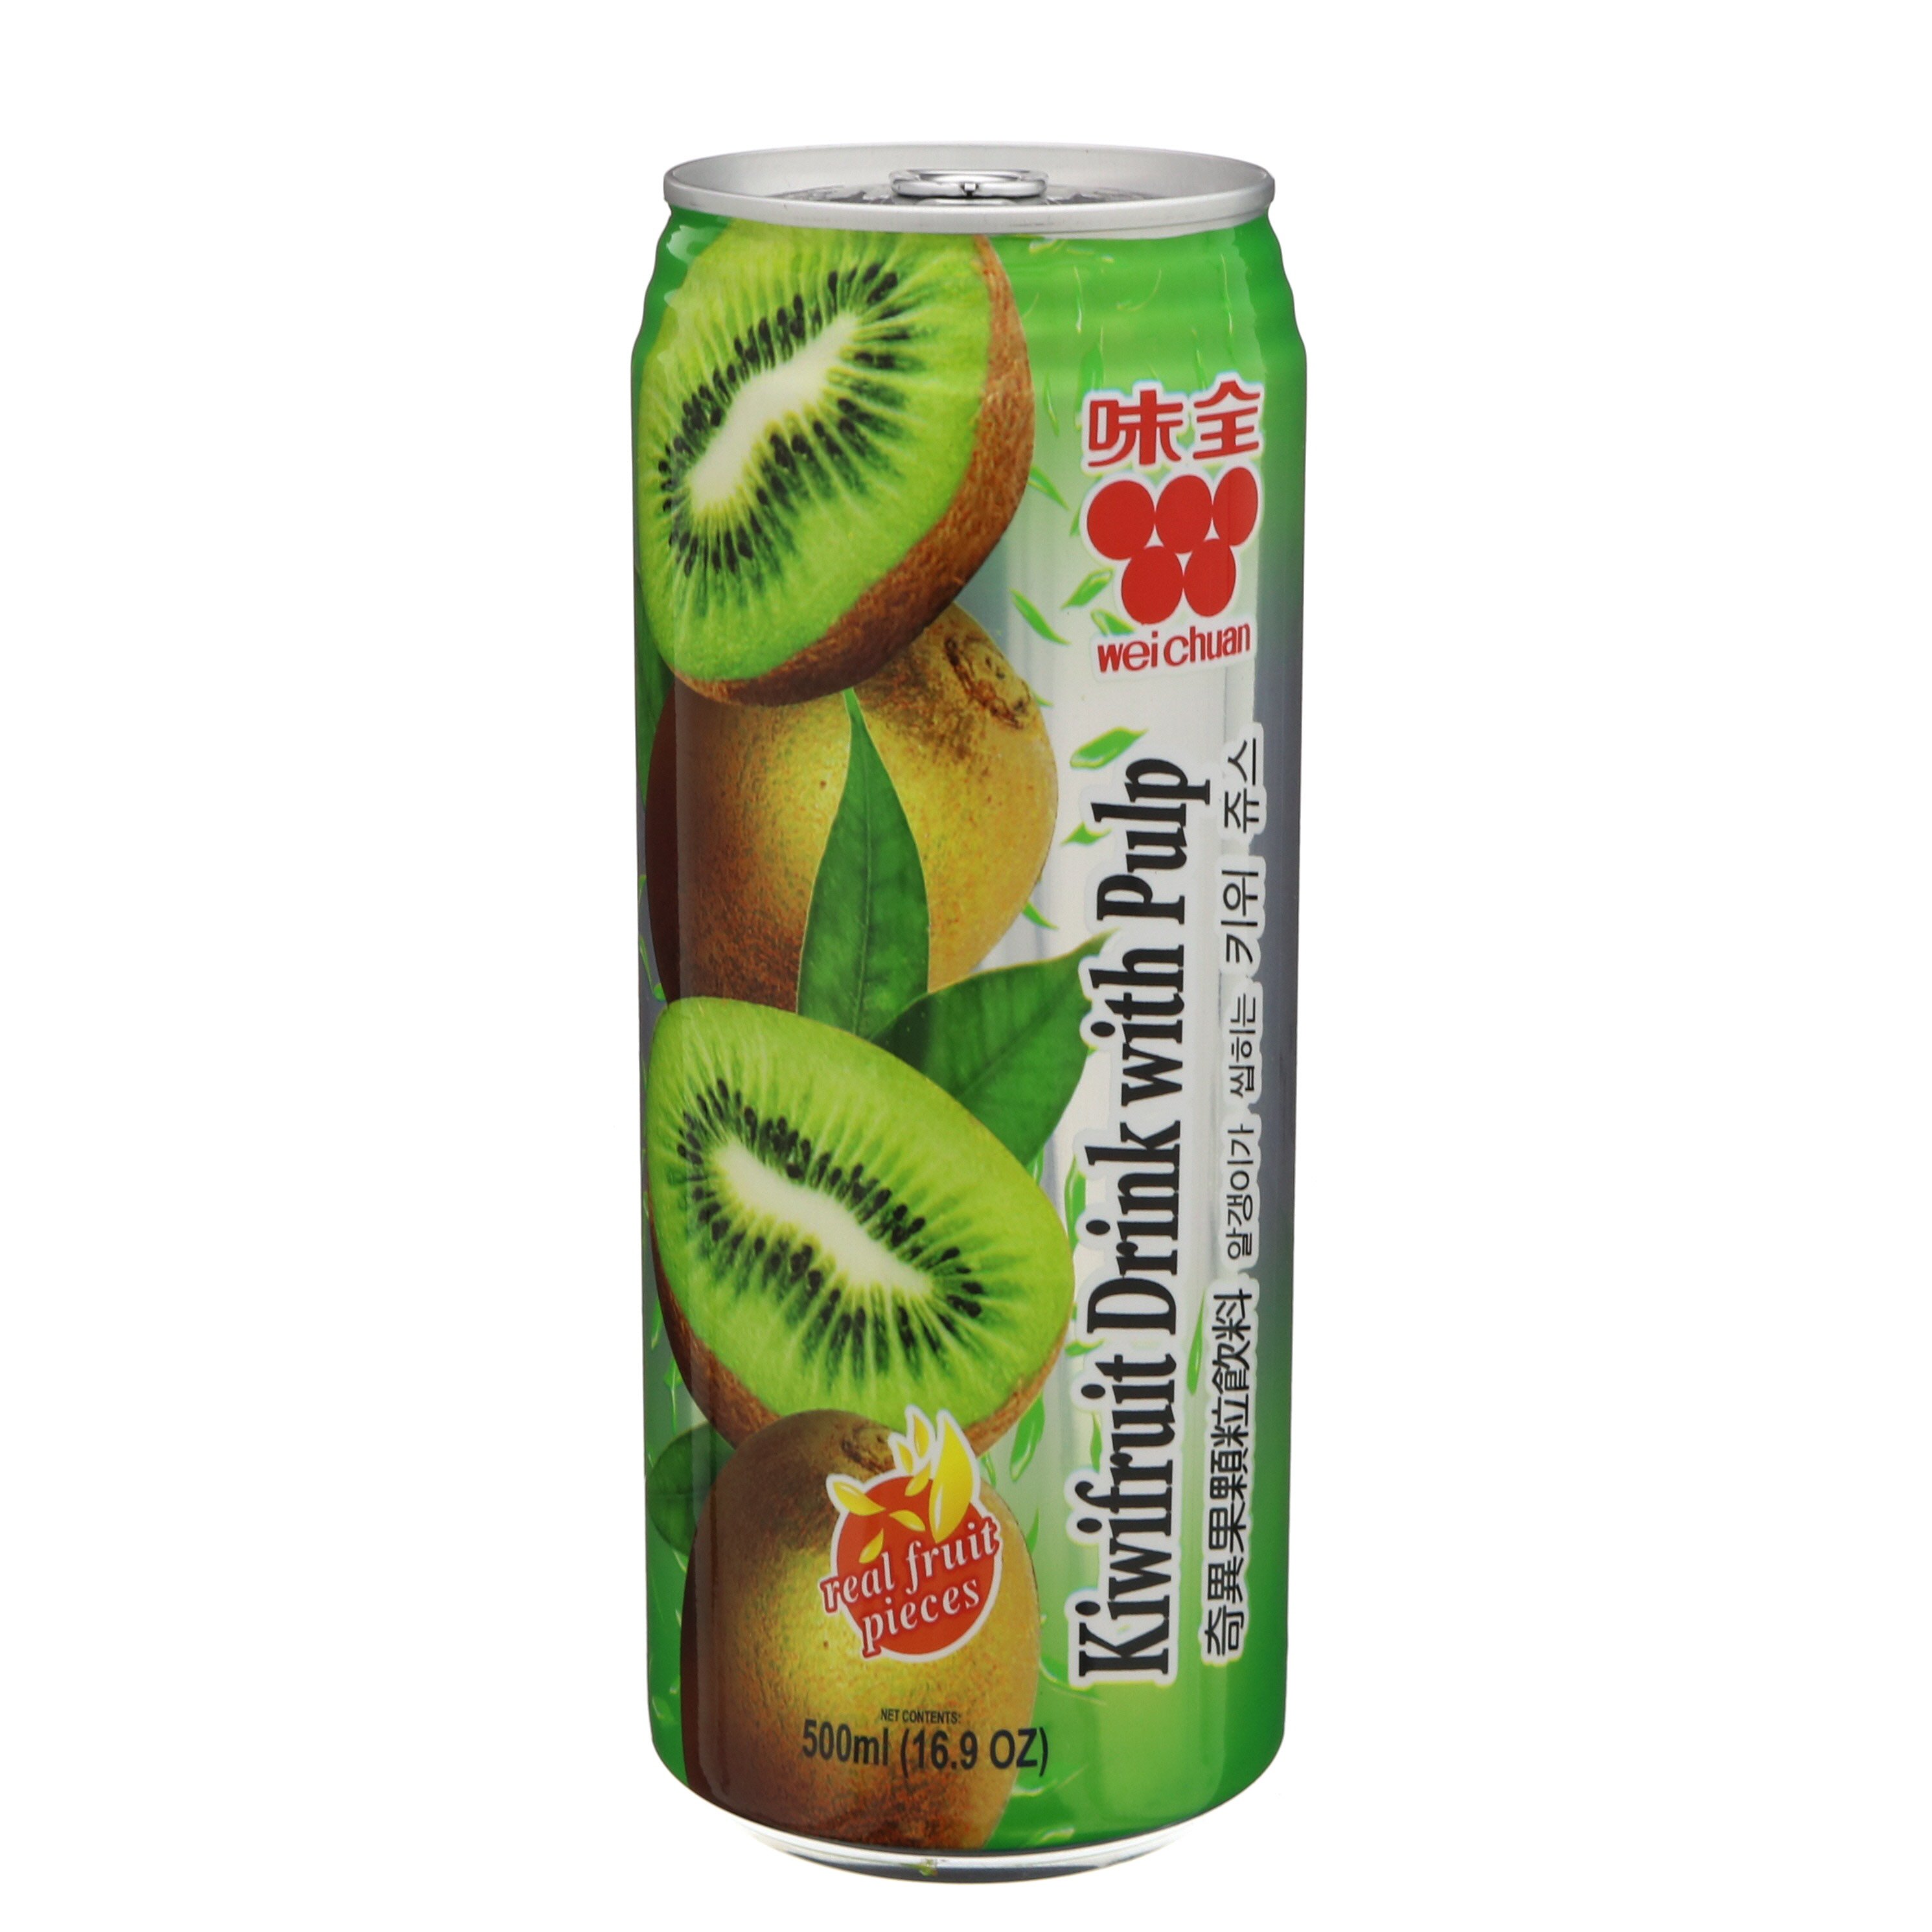 Wei-Chuan Kiwifruit Drink With Pulp - Shop Juice at H-E-B